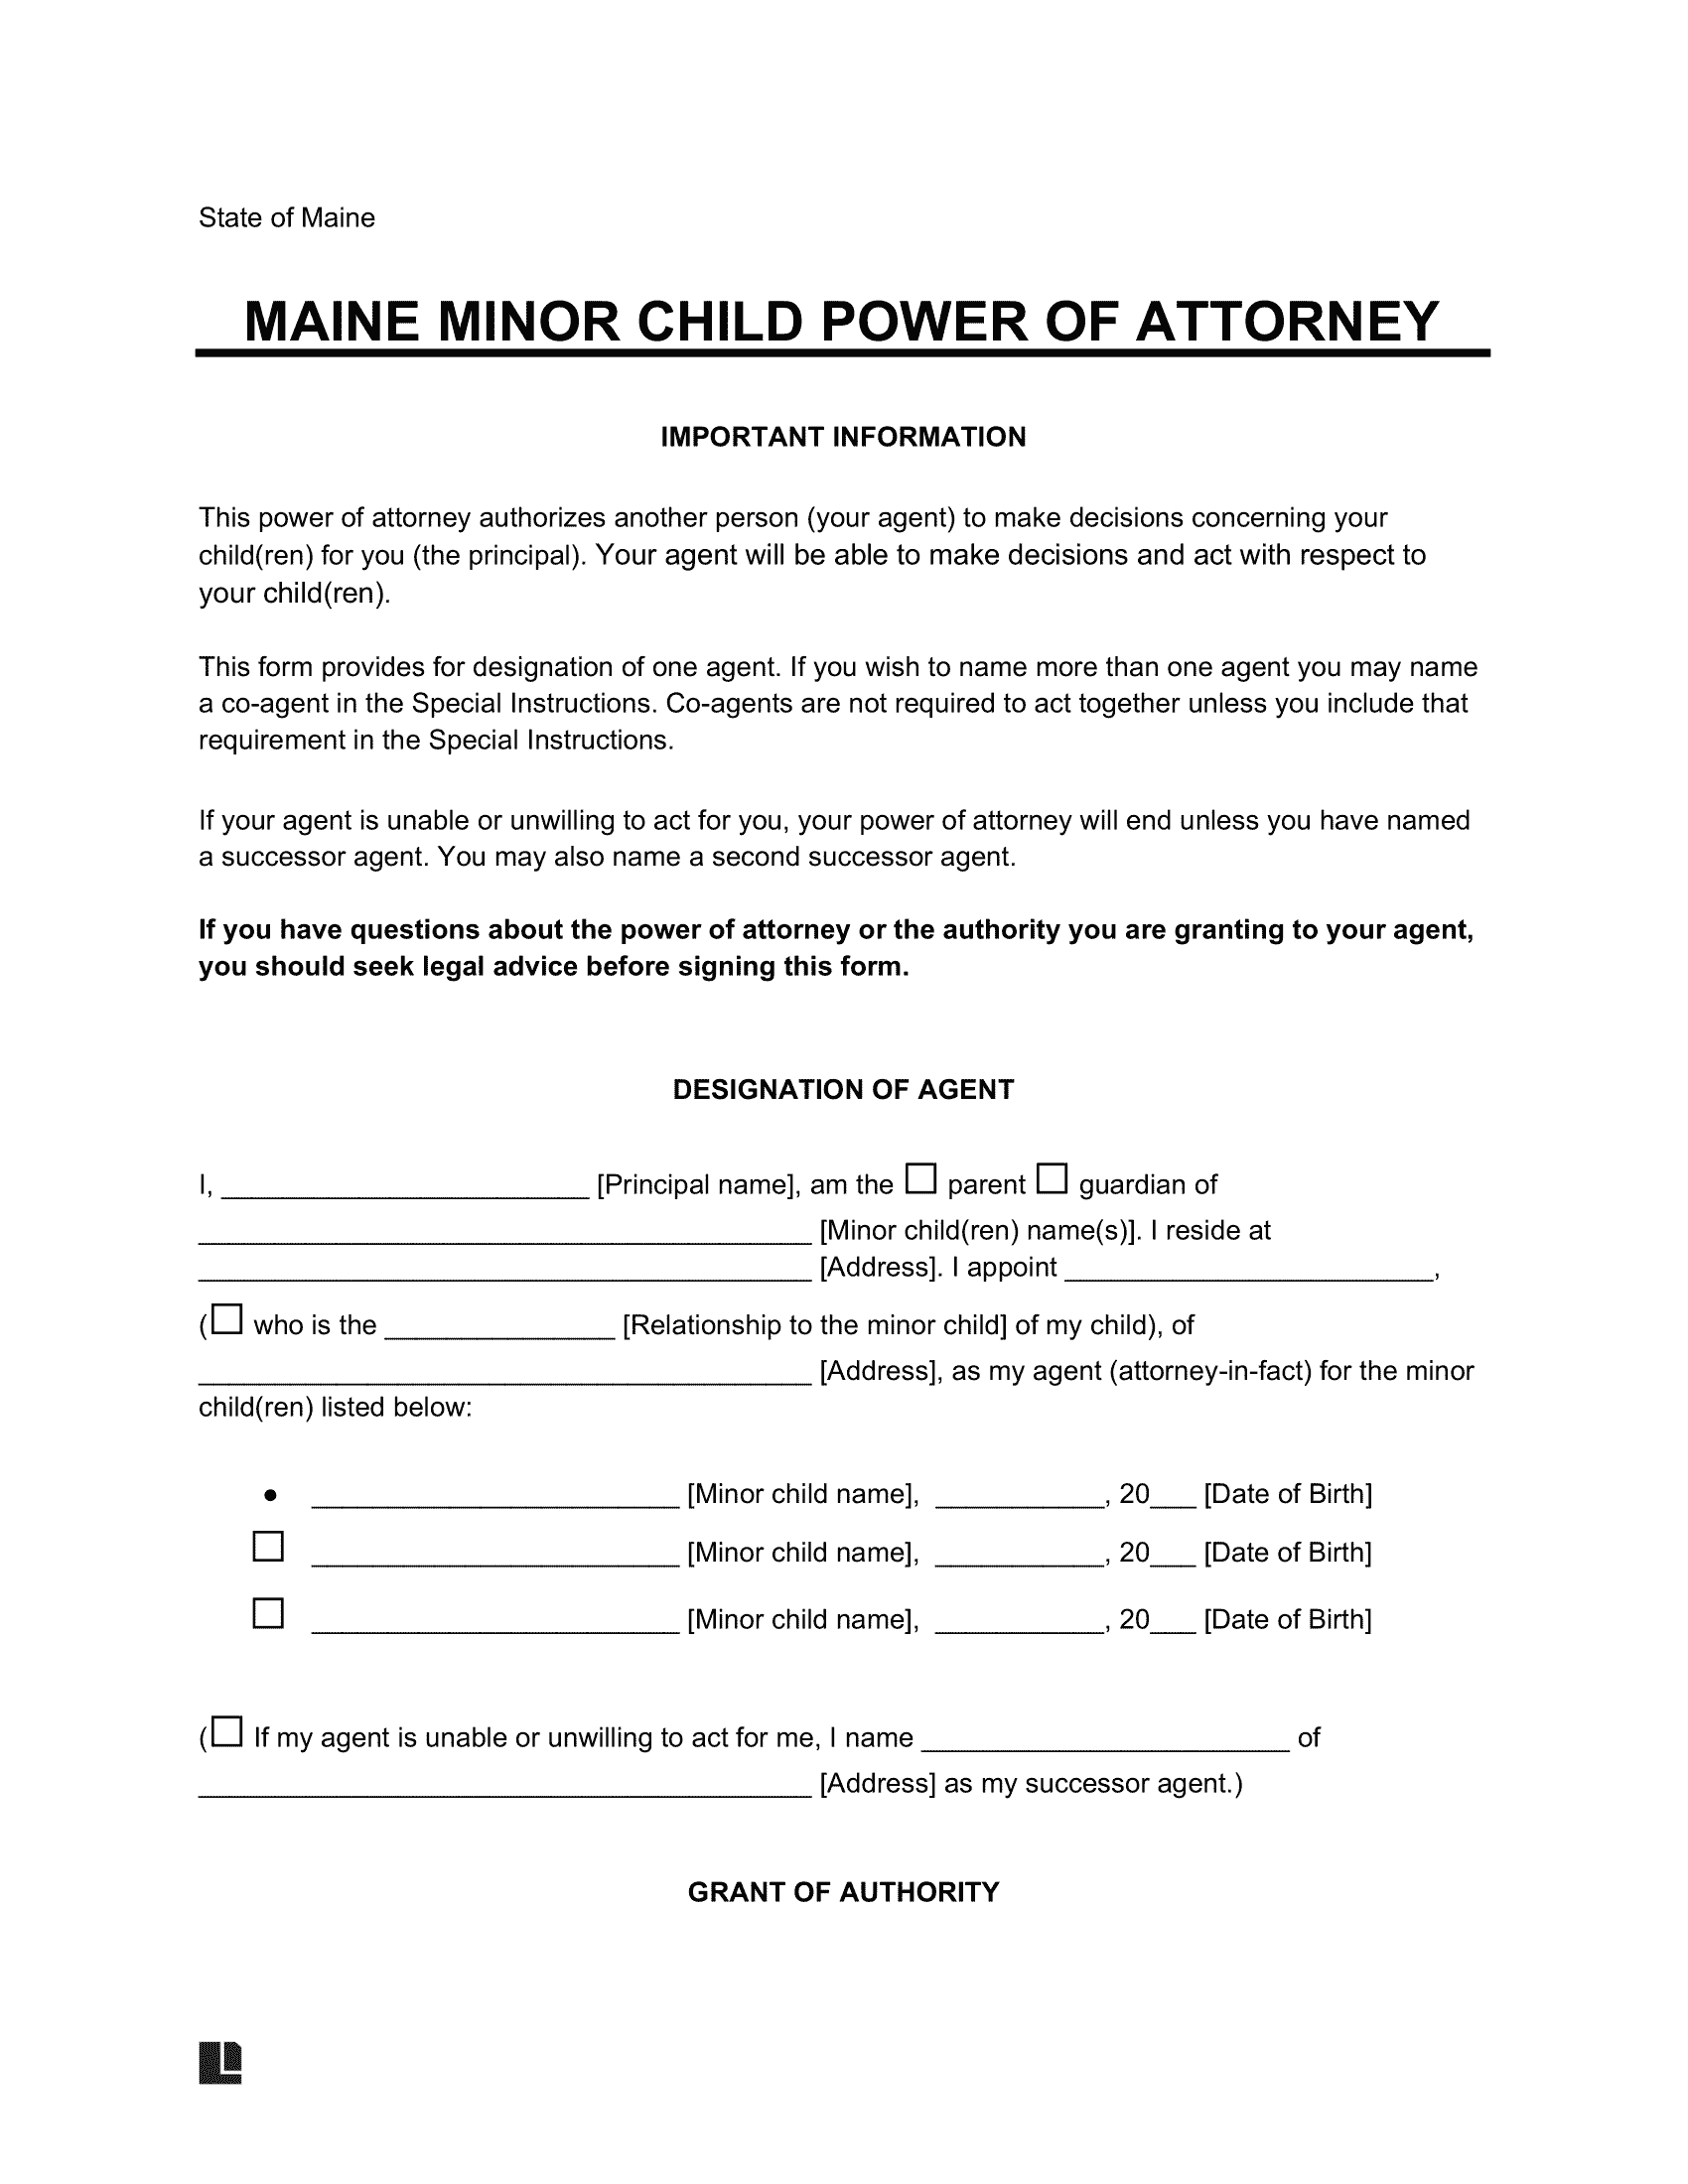 Maine Minor Child Power of Attorney Form